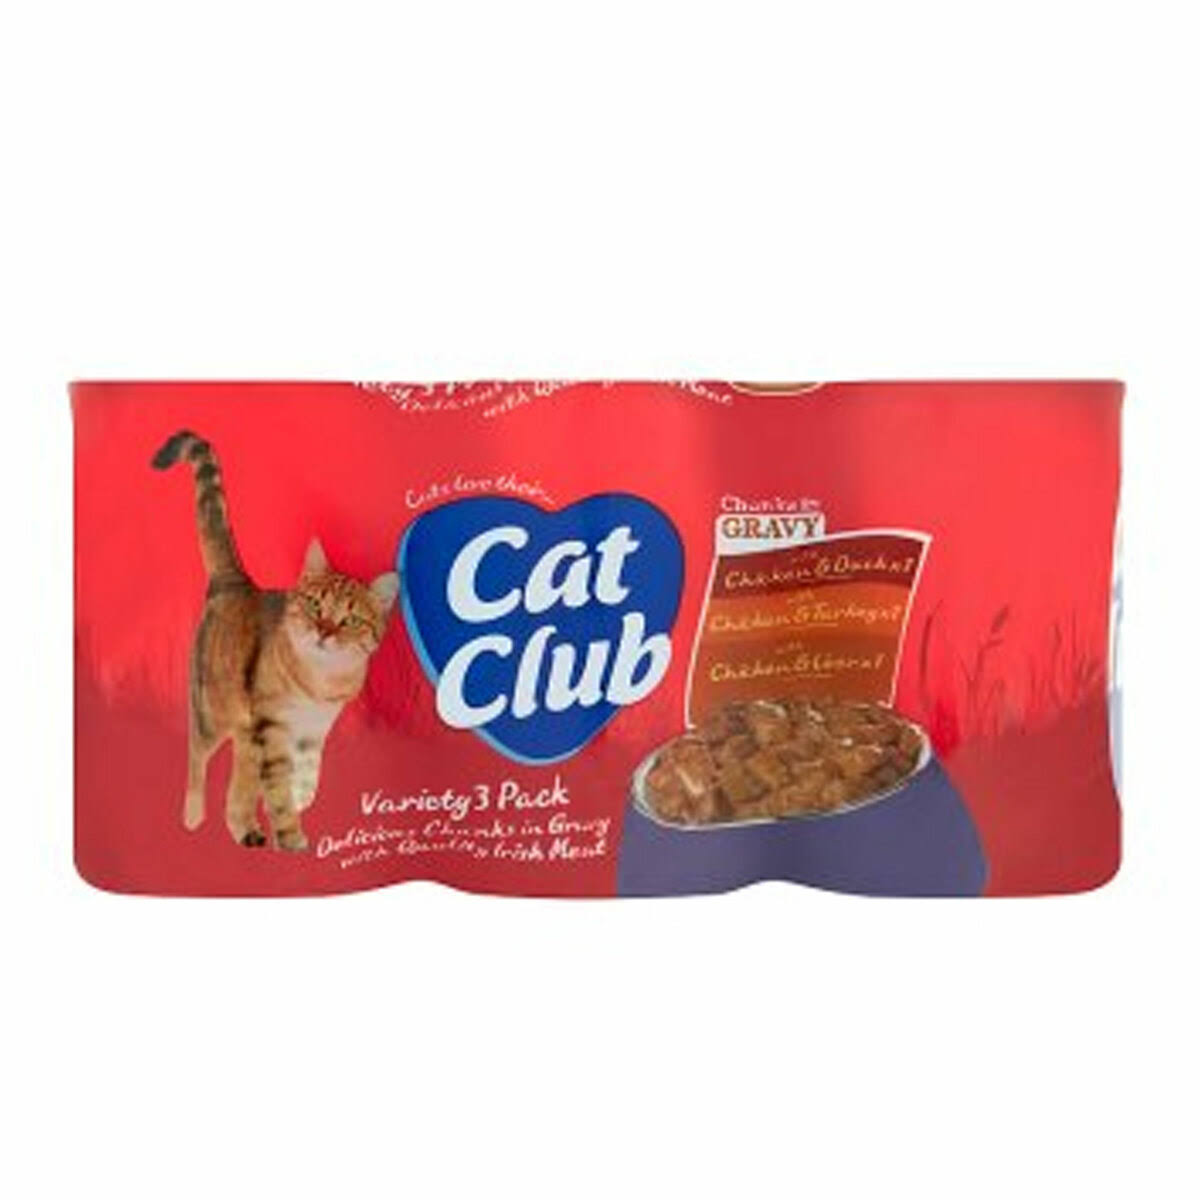 Cat Club Variety Chunks in Gravy 3 Pack